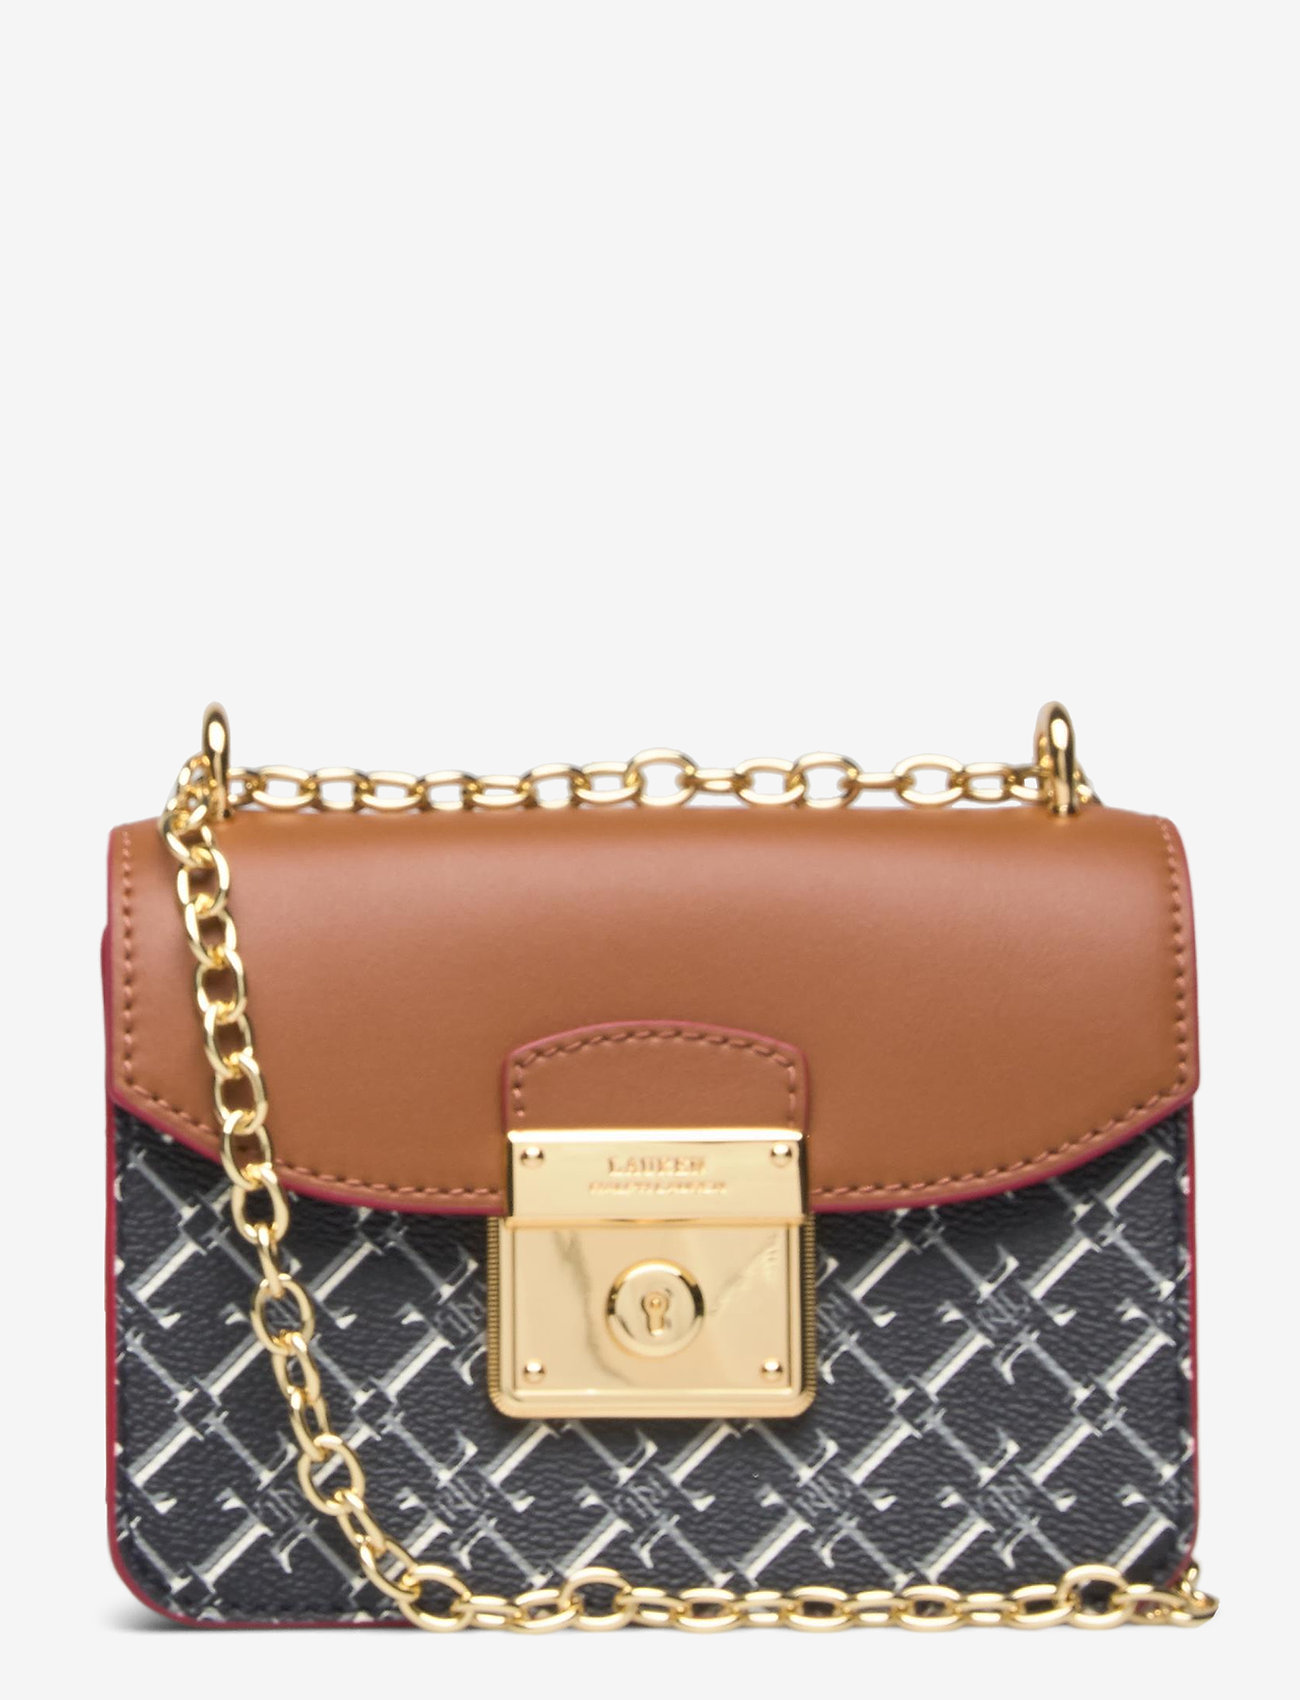 Ralph Lauren Mini Bag Deals, 57% OFF | www.emanagreen.com